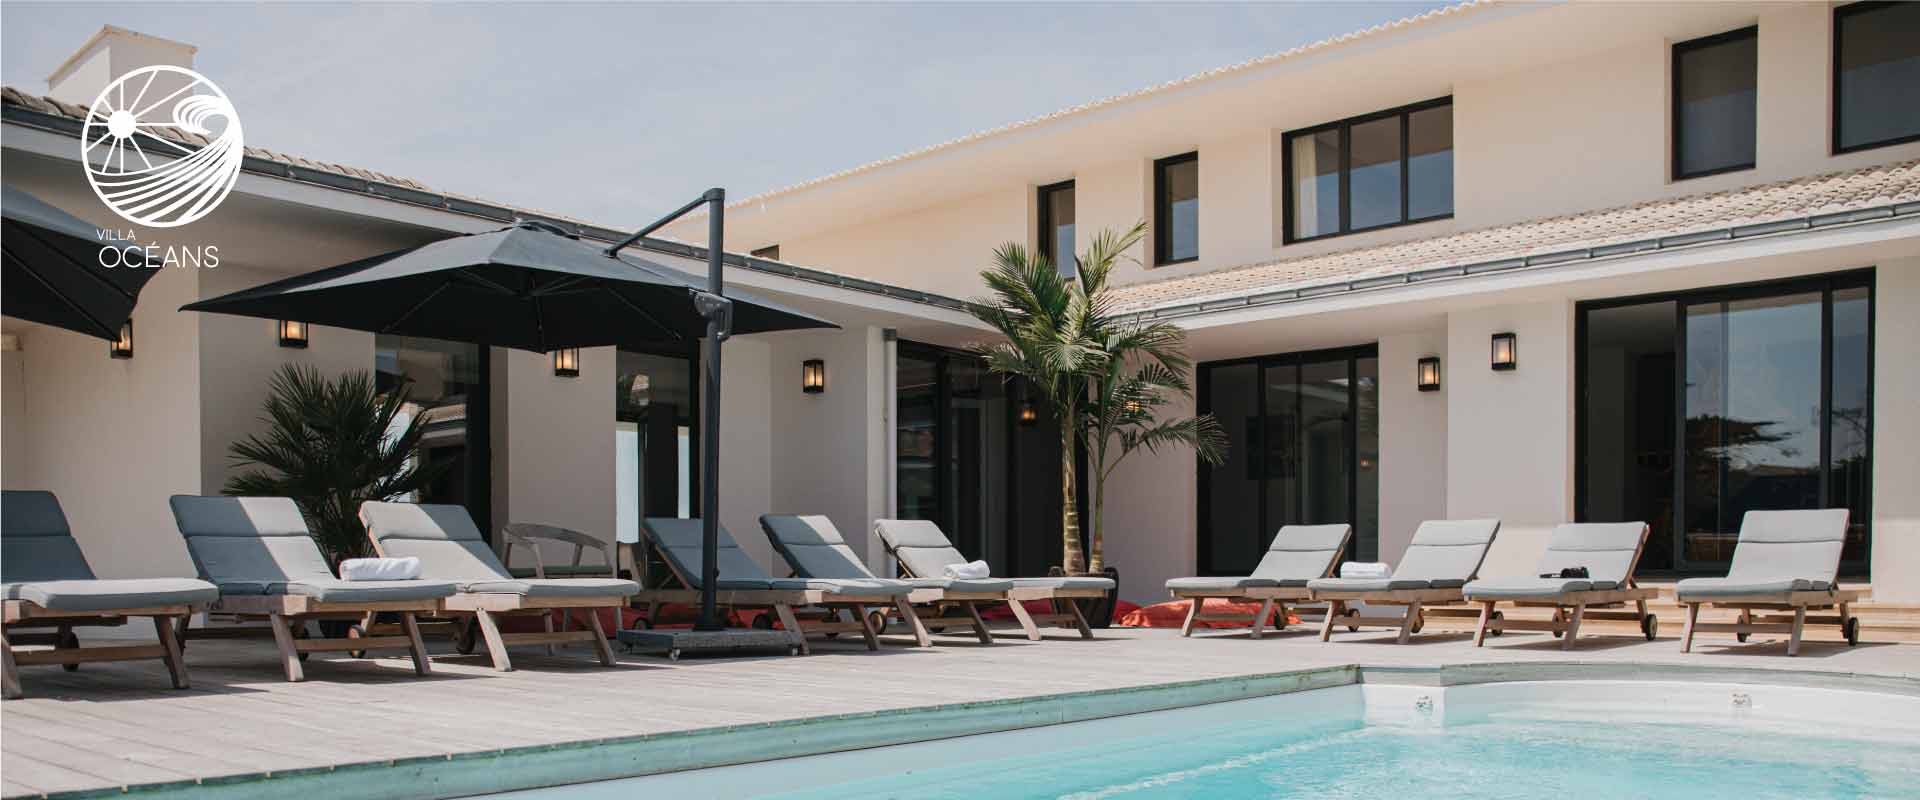 villa oceans creation site internet villa haut de gamme de luxe seminaires bretignolles sur mer en vendee 85